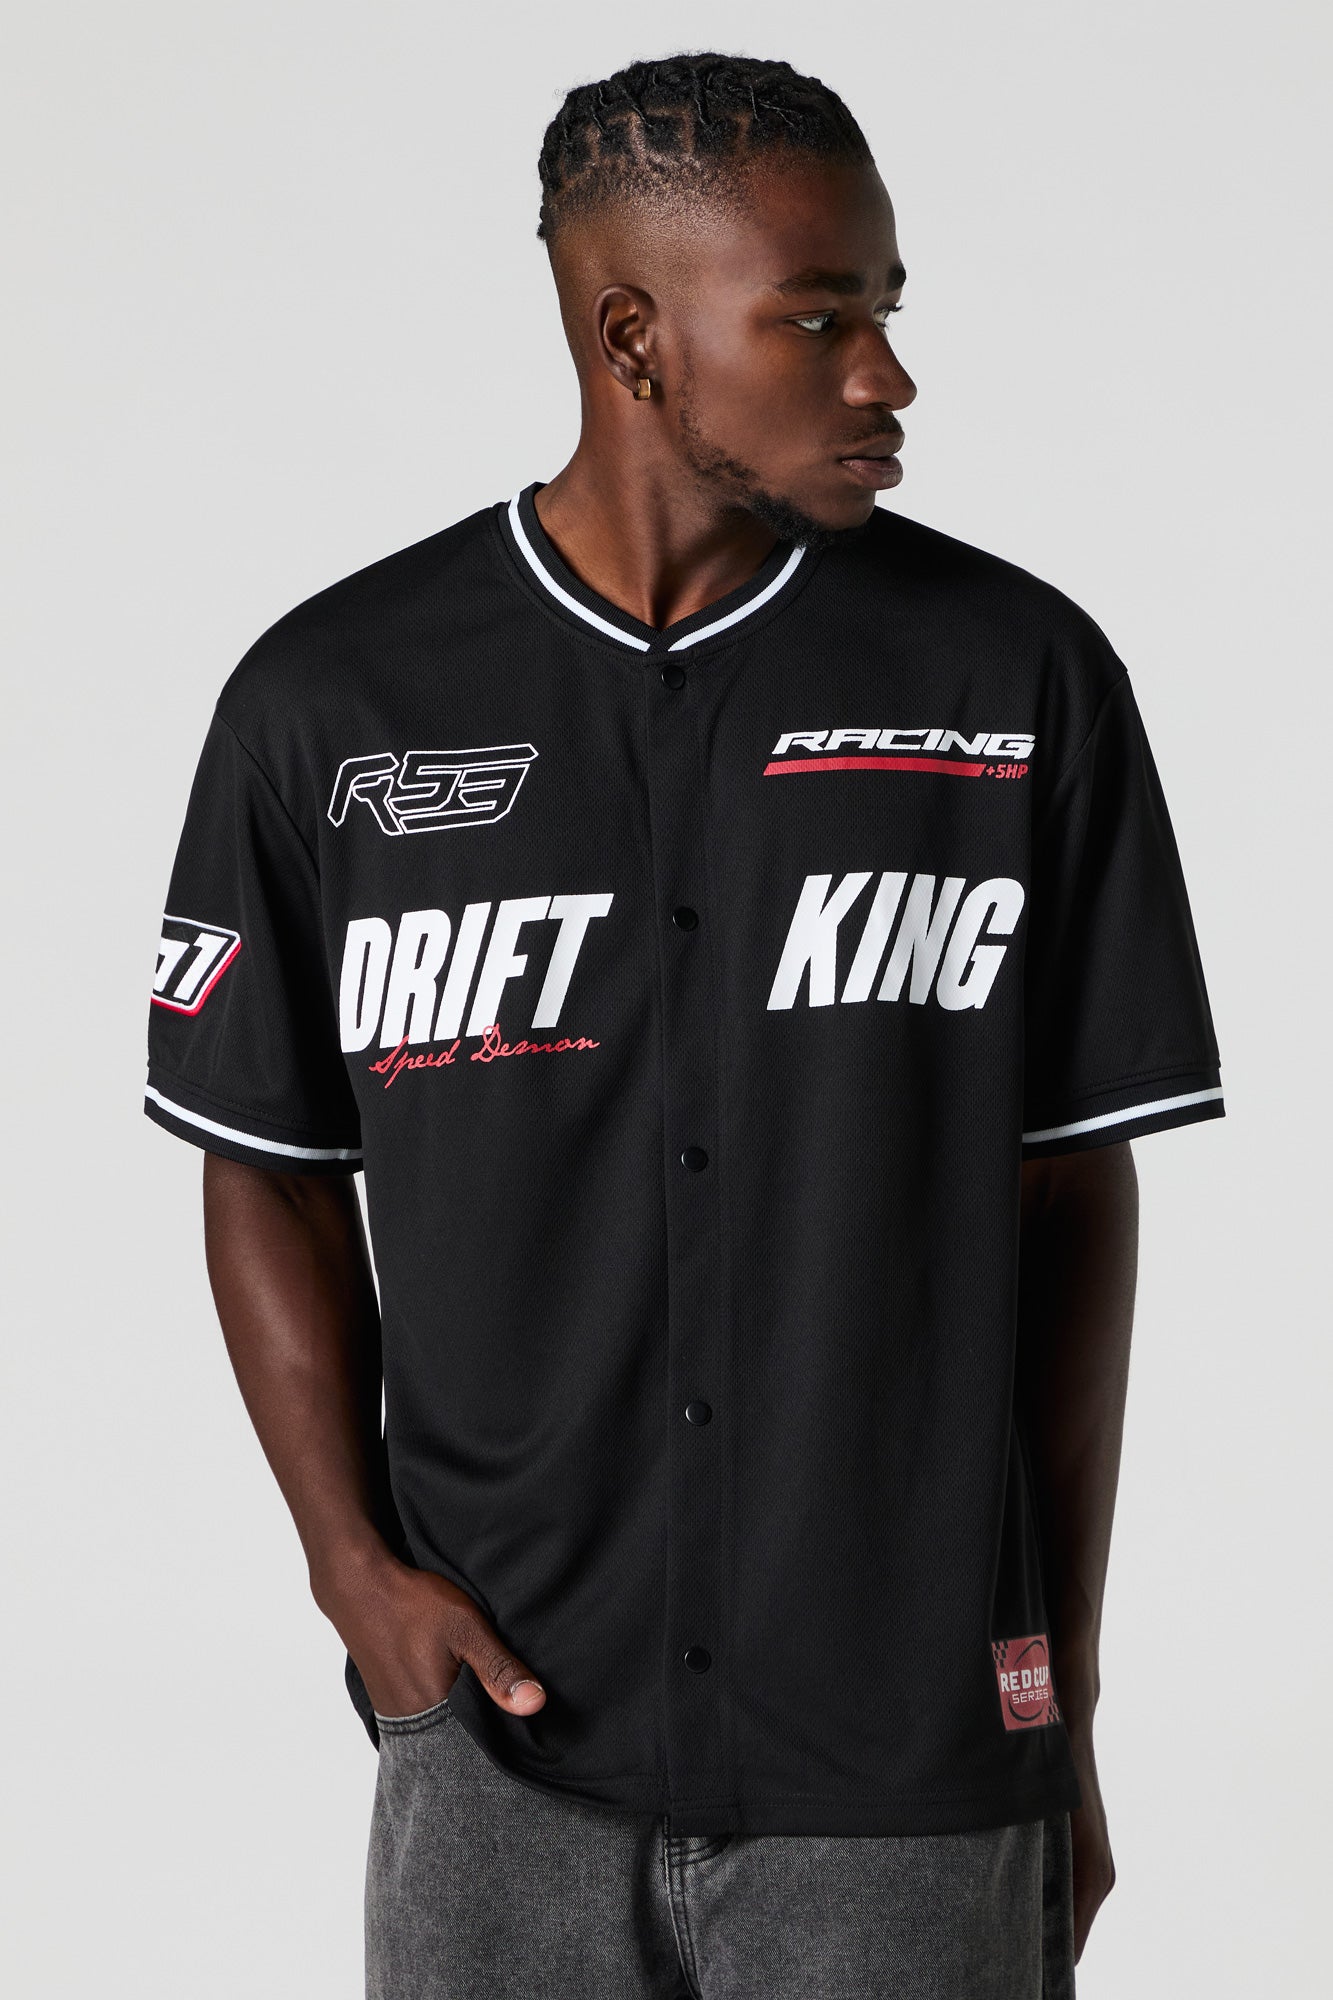 Drift King Graphic Mesh Racing Baseball Jersey